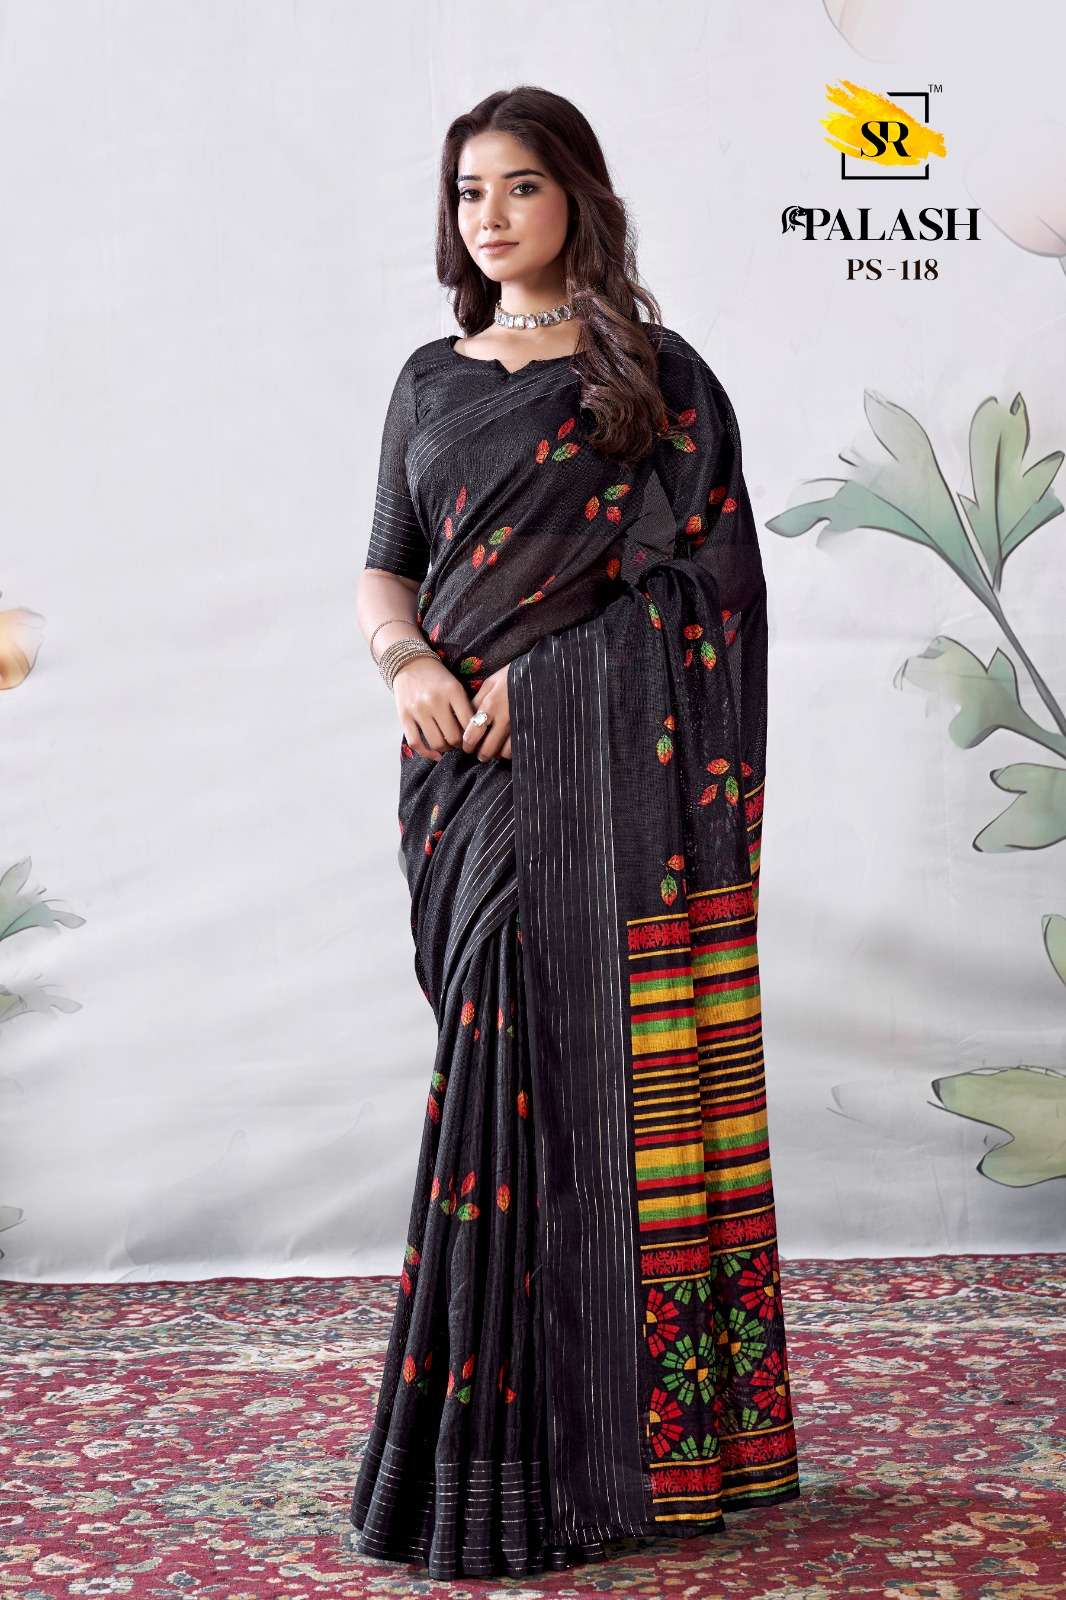 sr palash series 111-120 jute linen casual wear sarees collection